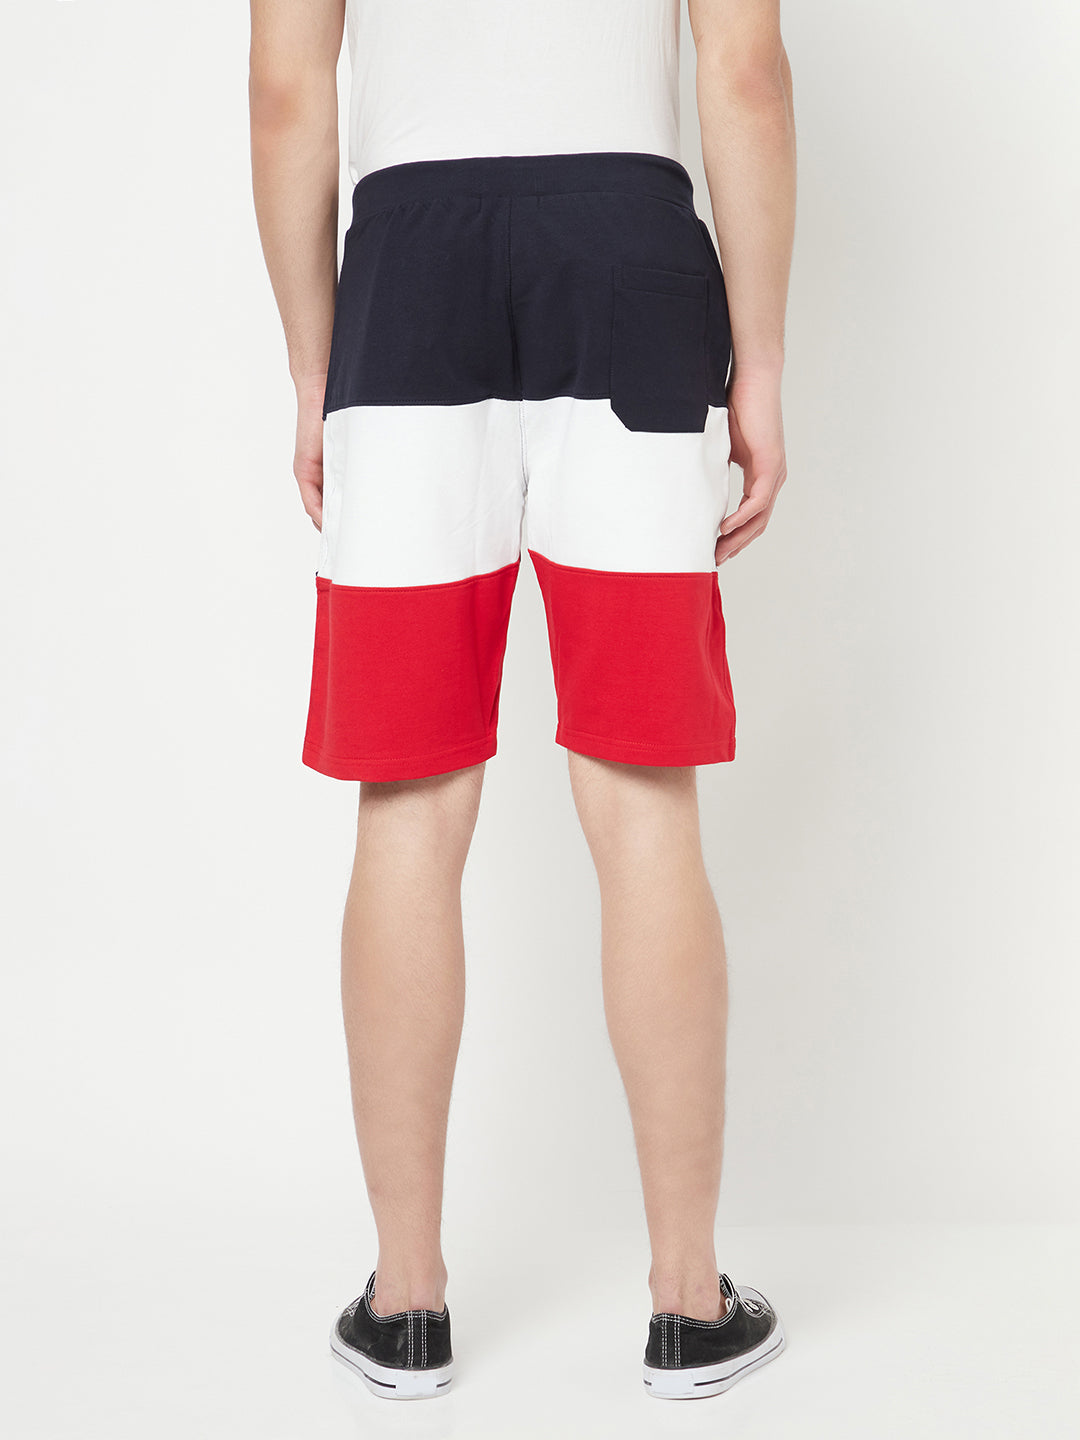 Multi Colourblocked Sports Shorts - Men Shorts